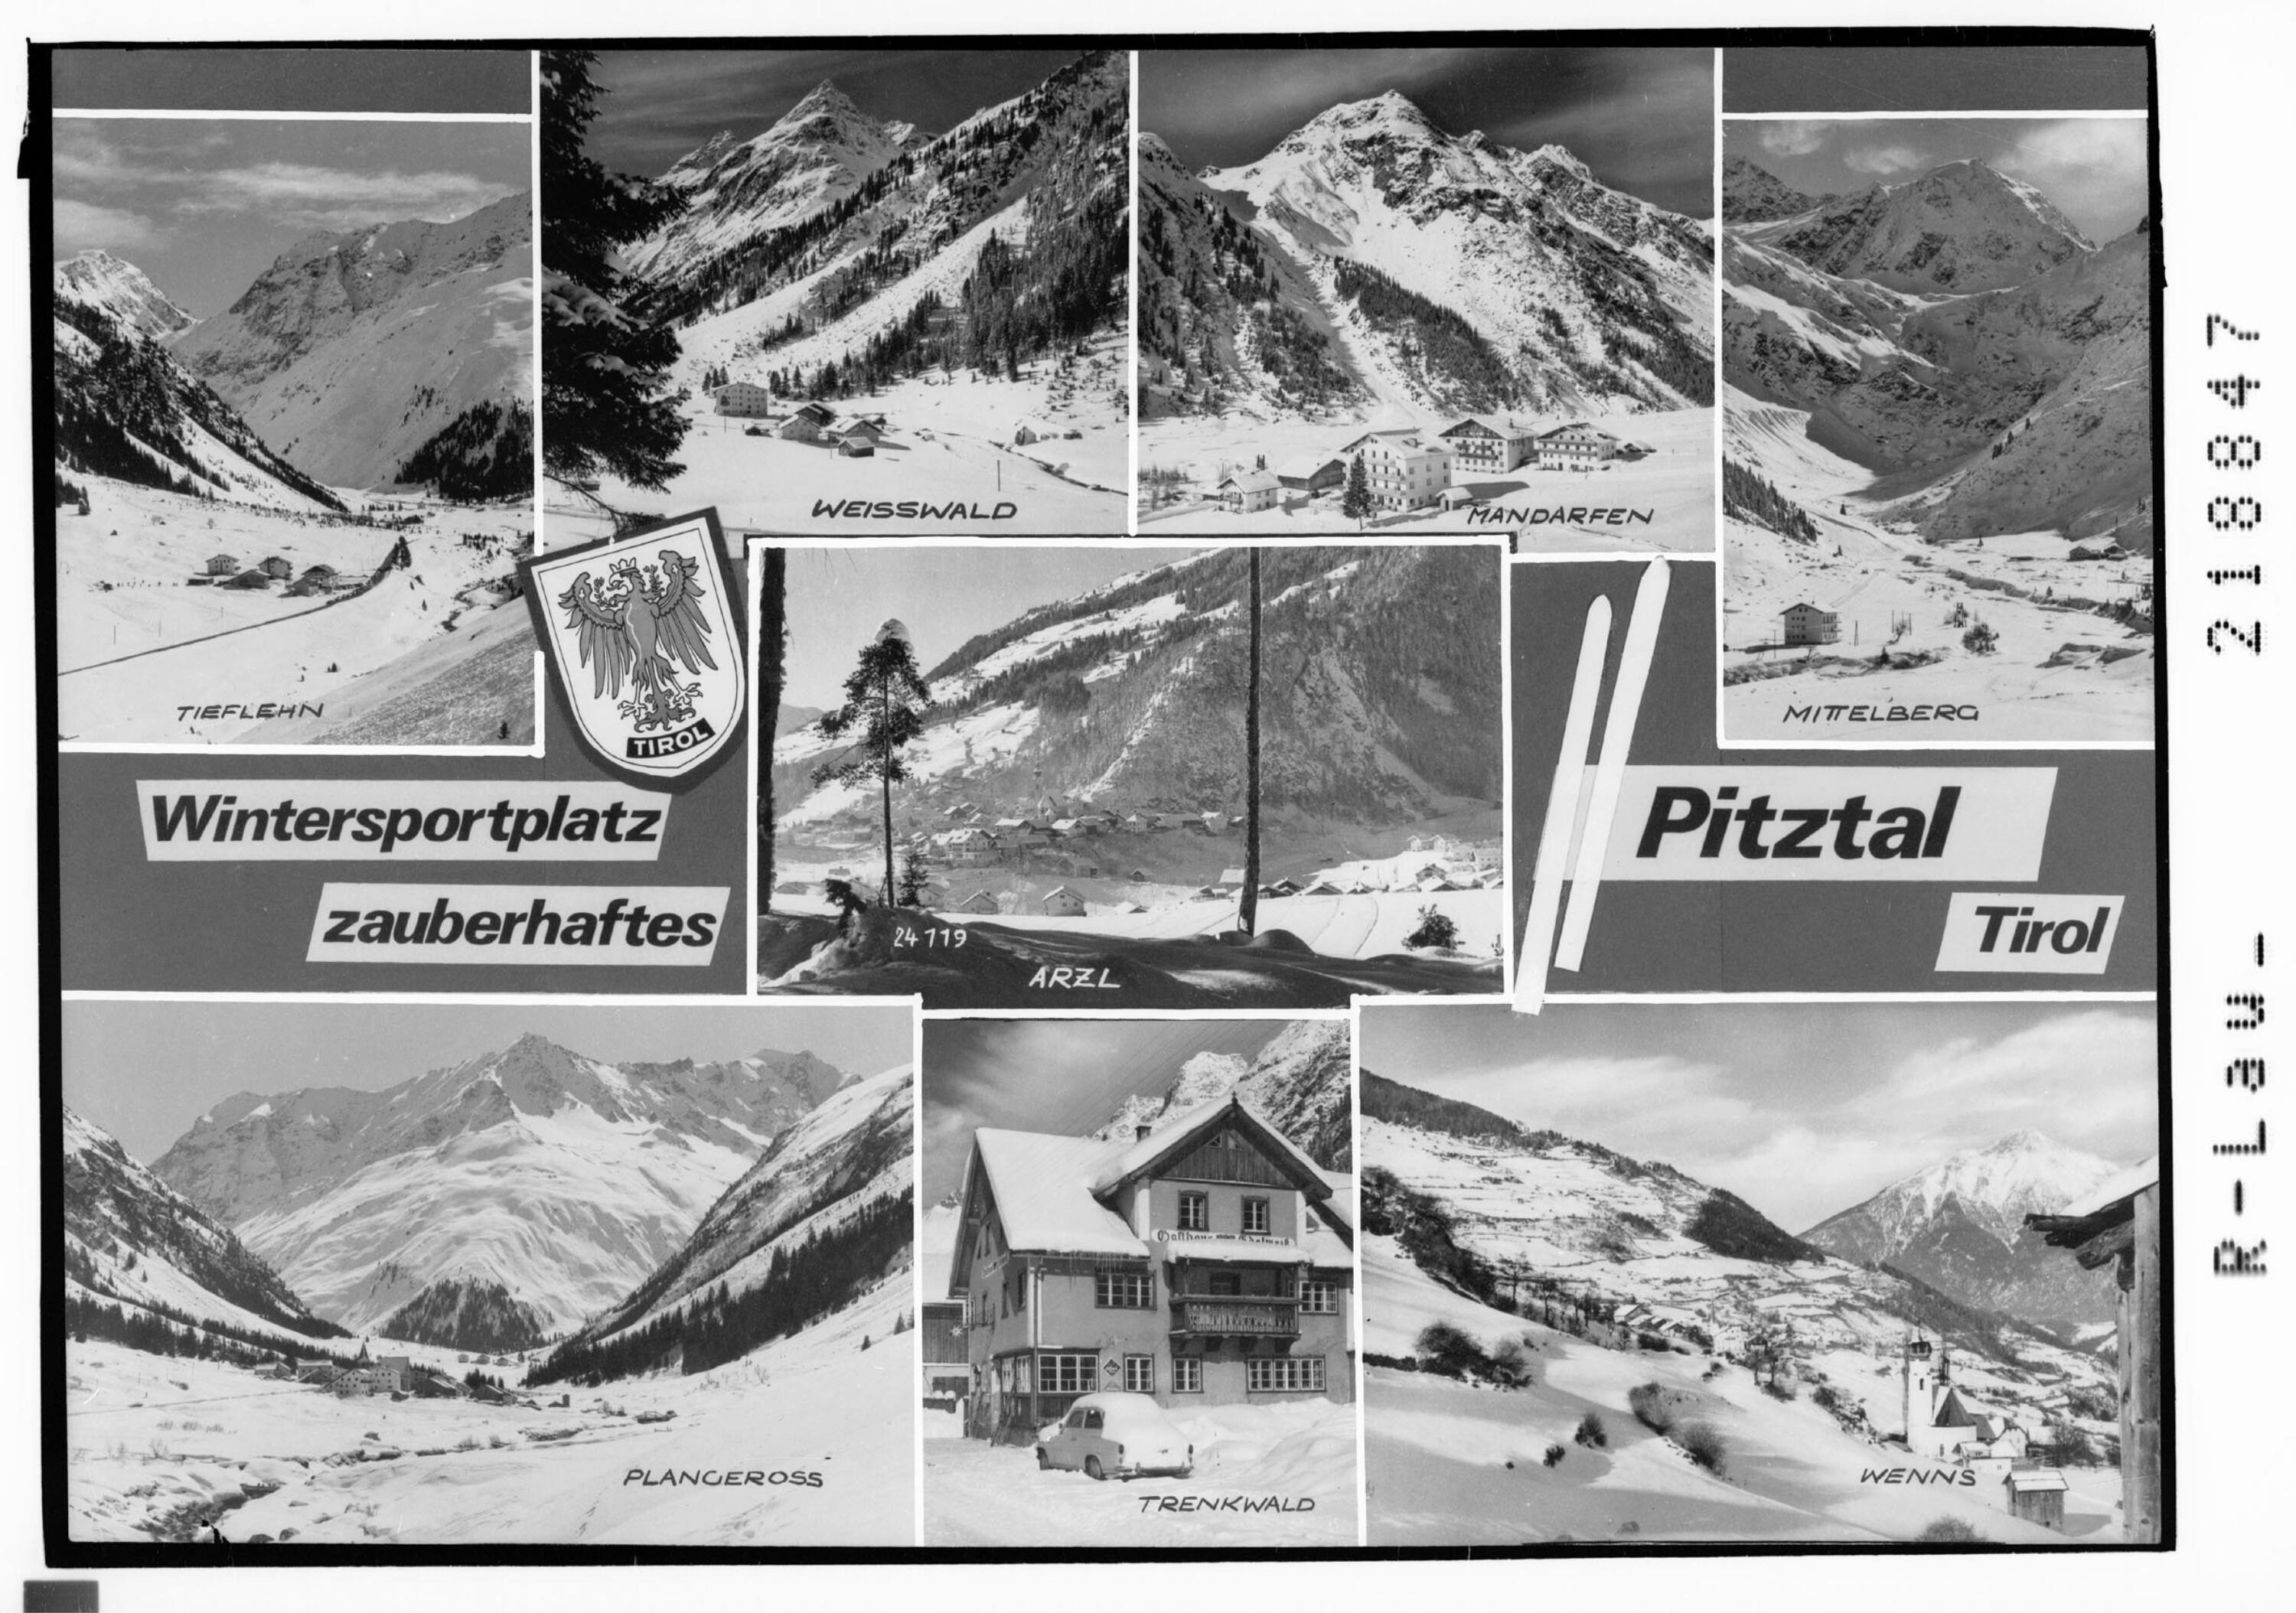 Wintersportplatz zauberhaftes Pitztal Tirol></div>


    <hr>
    <div class=